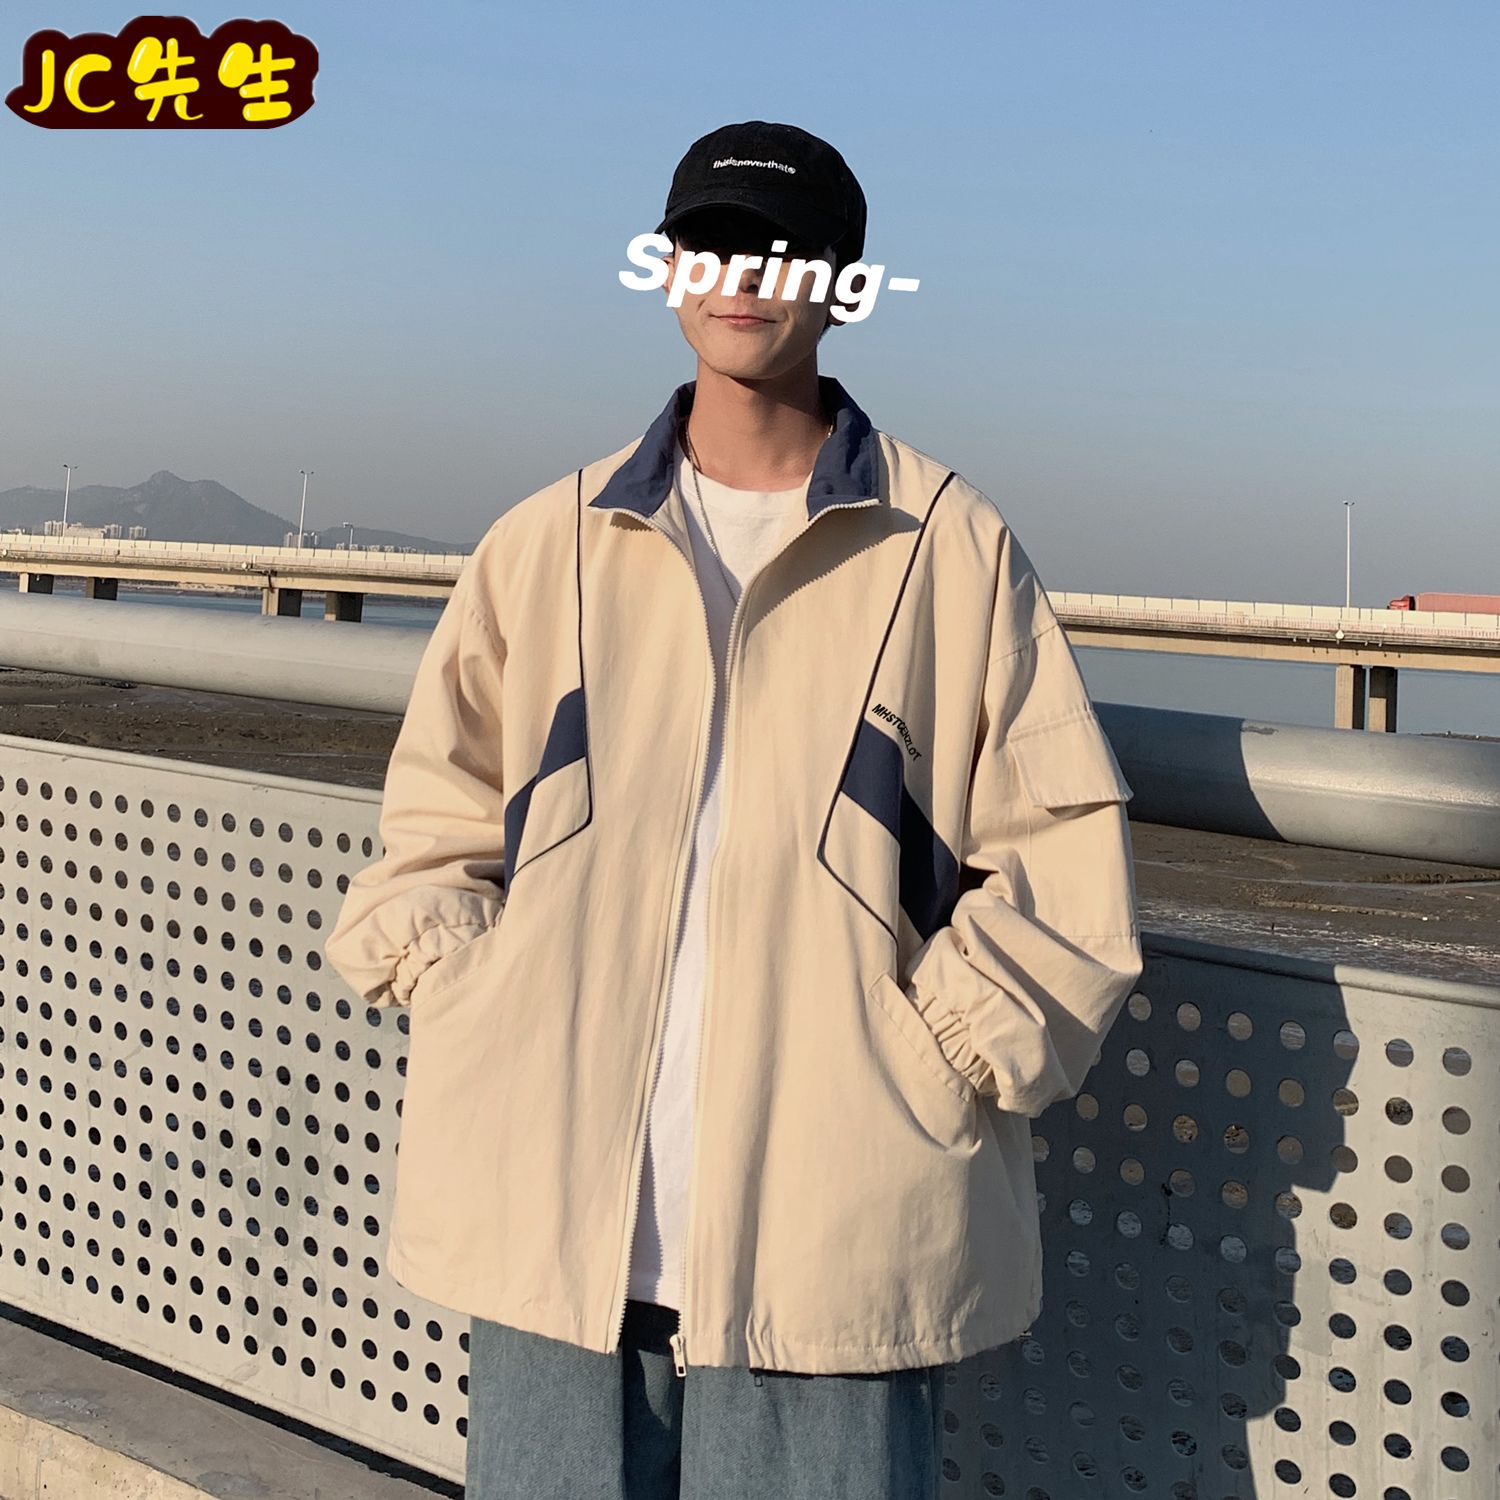 New jacket jacket men's spring Korean loose short retro Hong Kong Style Baseball Jacket color matching Lapel top fashion brand